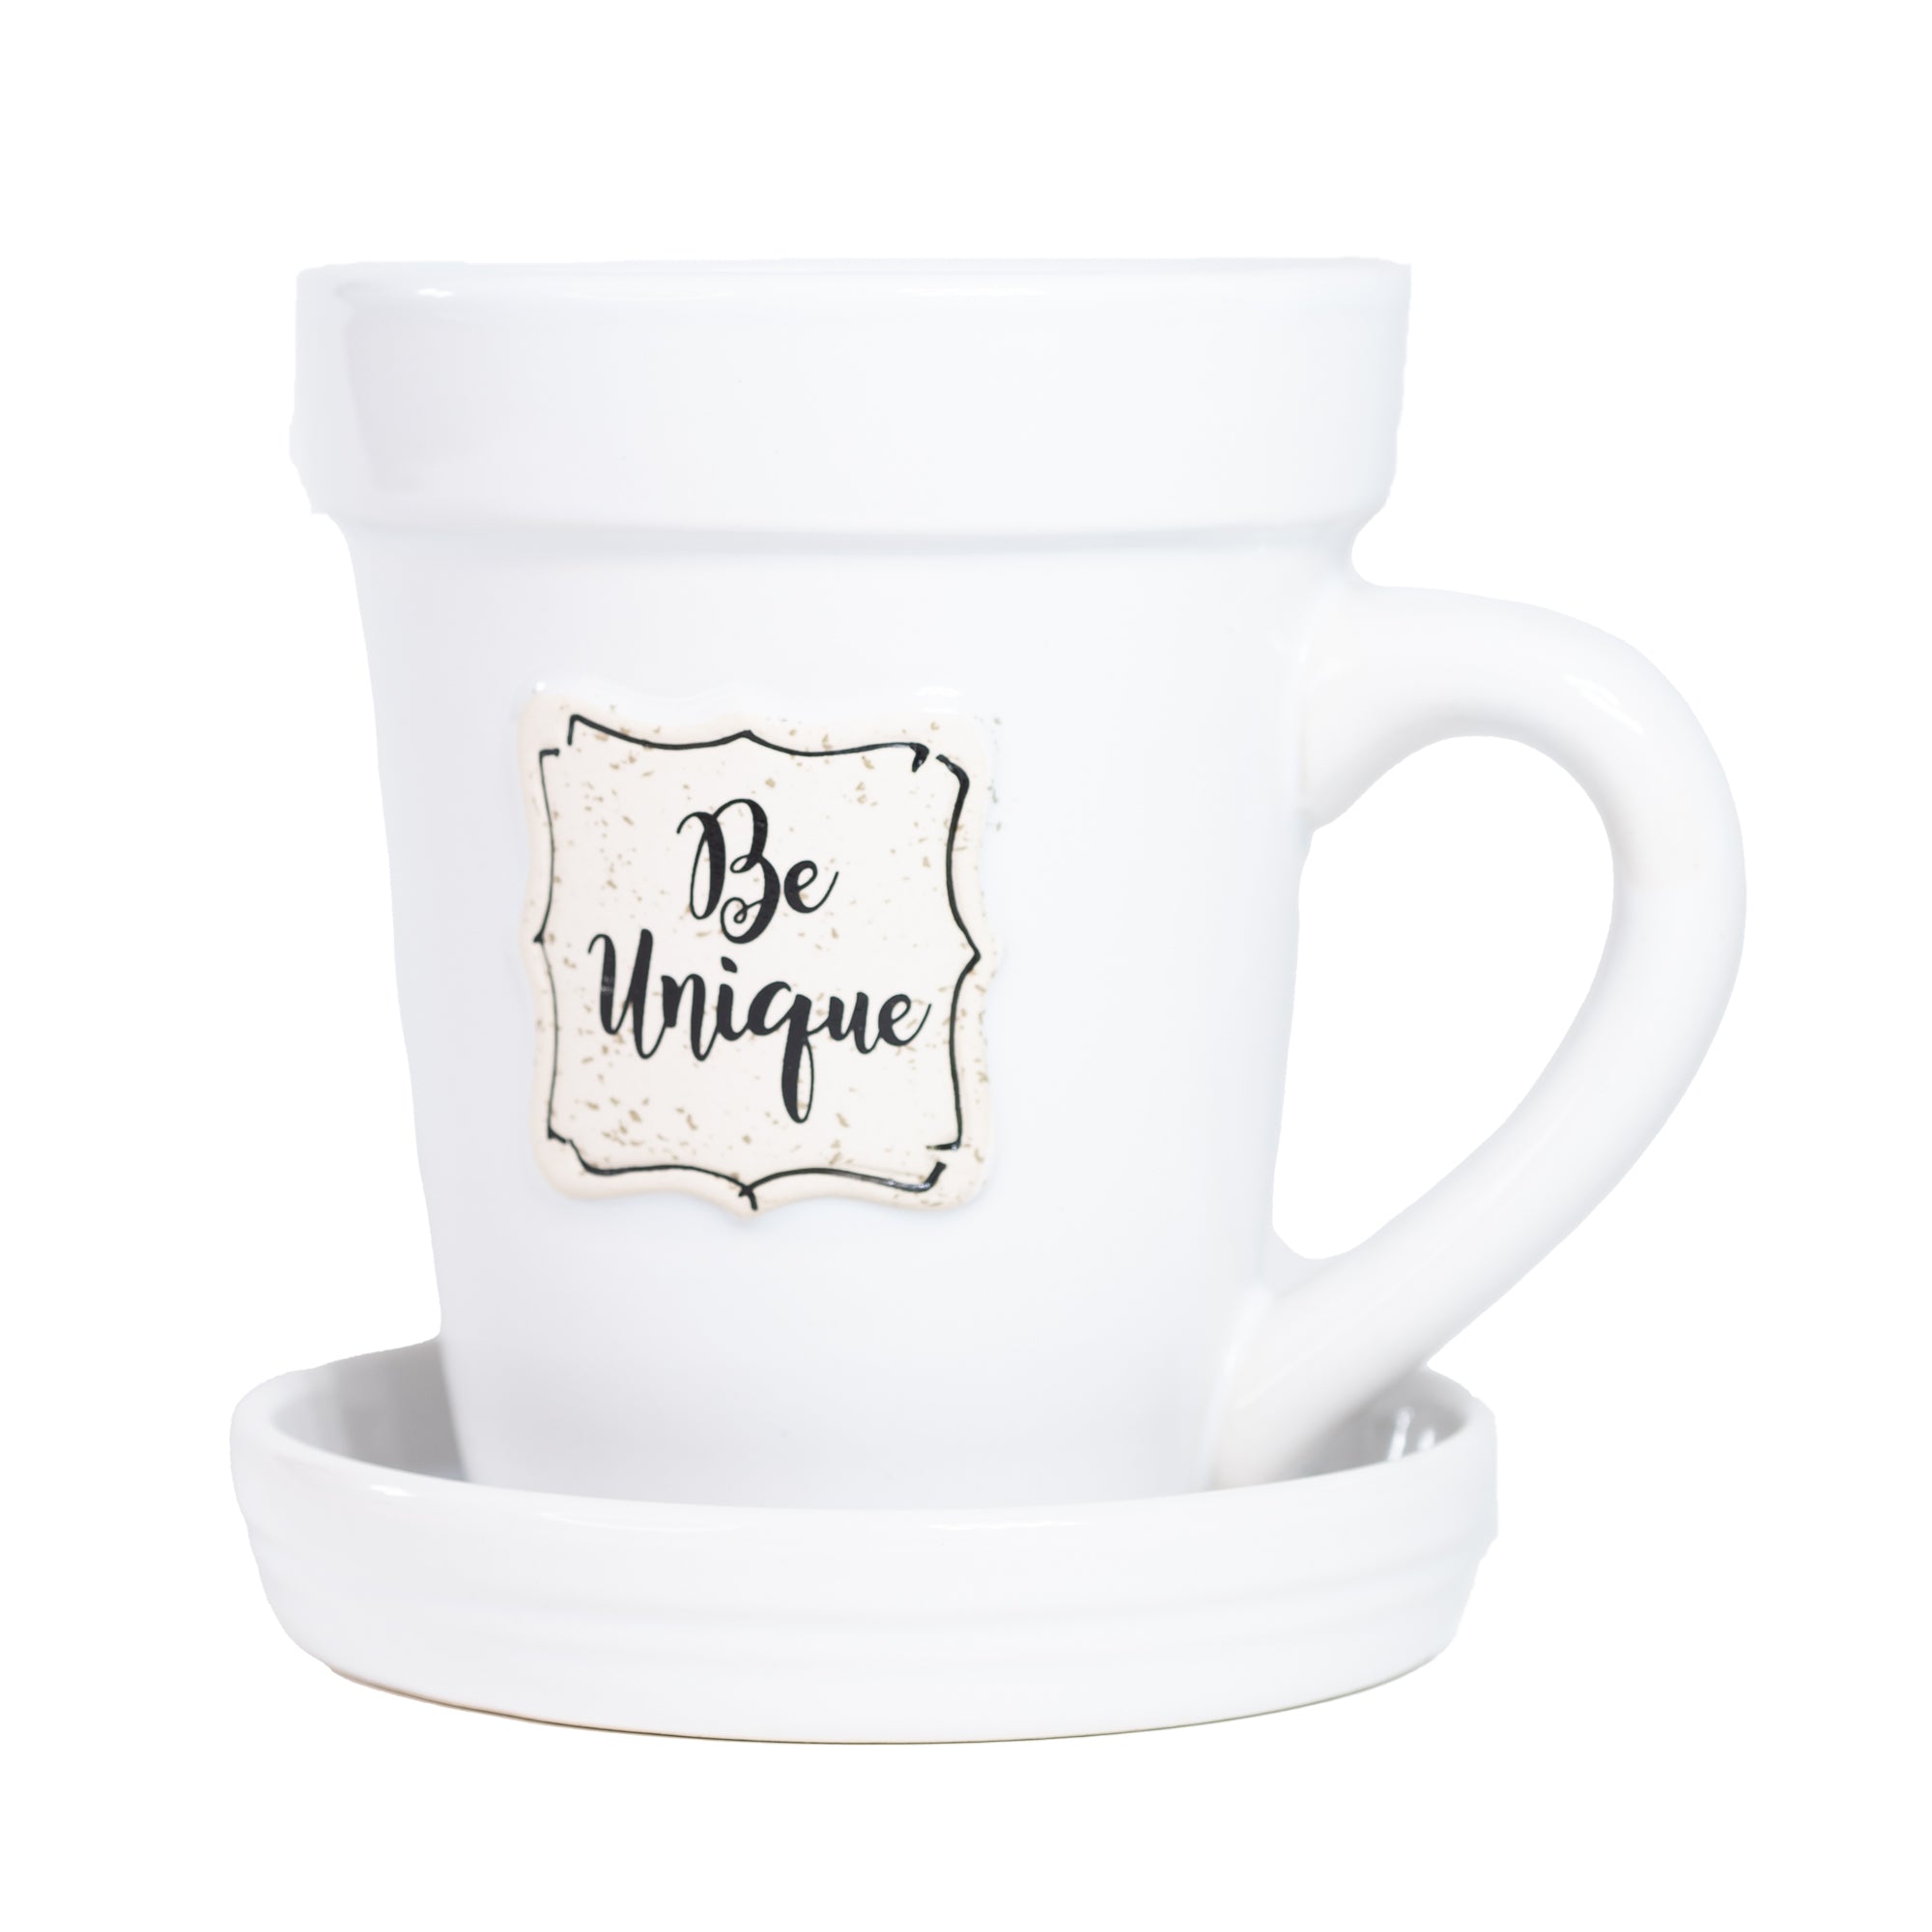 White Flower Pot Mug - “Be Unique”